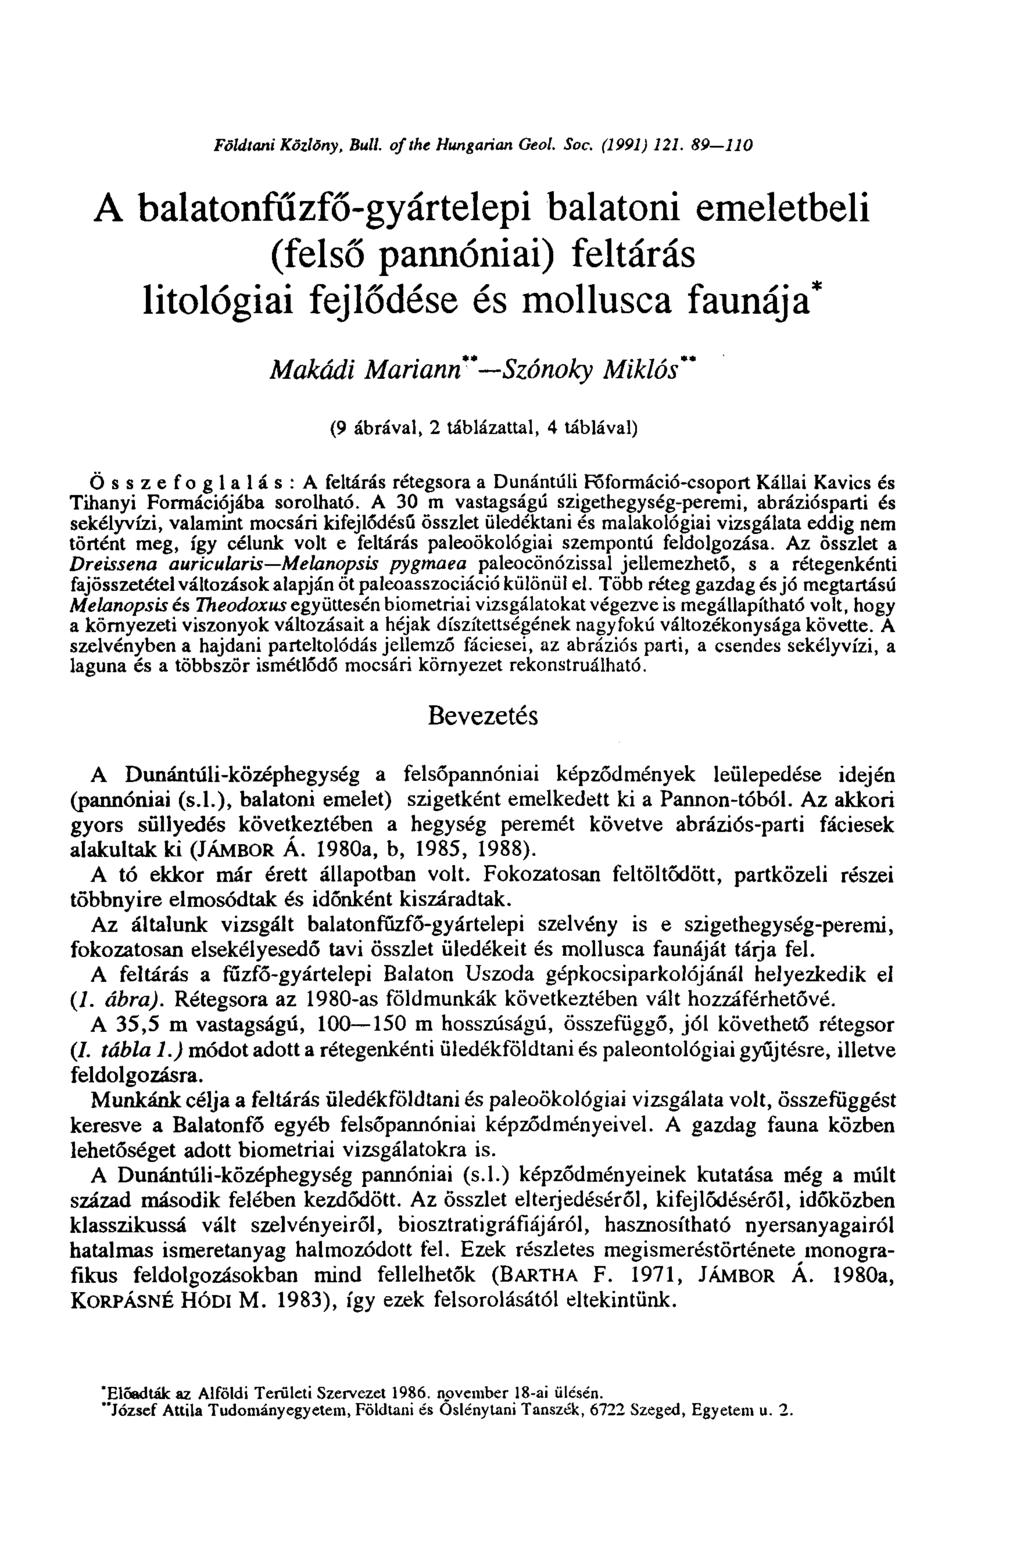 Földtani Közlöny. Bull, of the Hungarian Geol. Soc. (1991) 121.